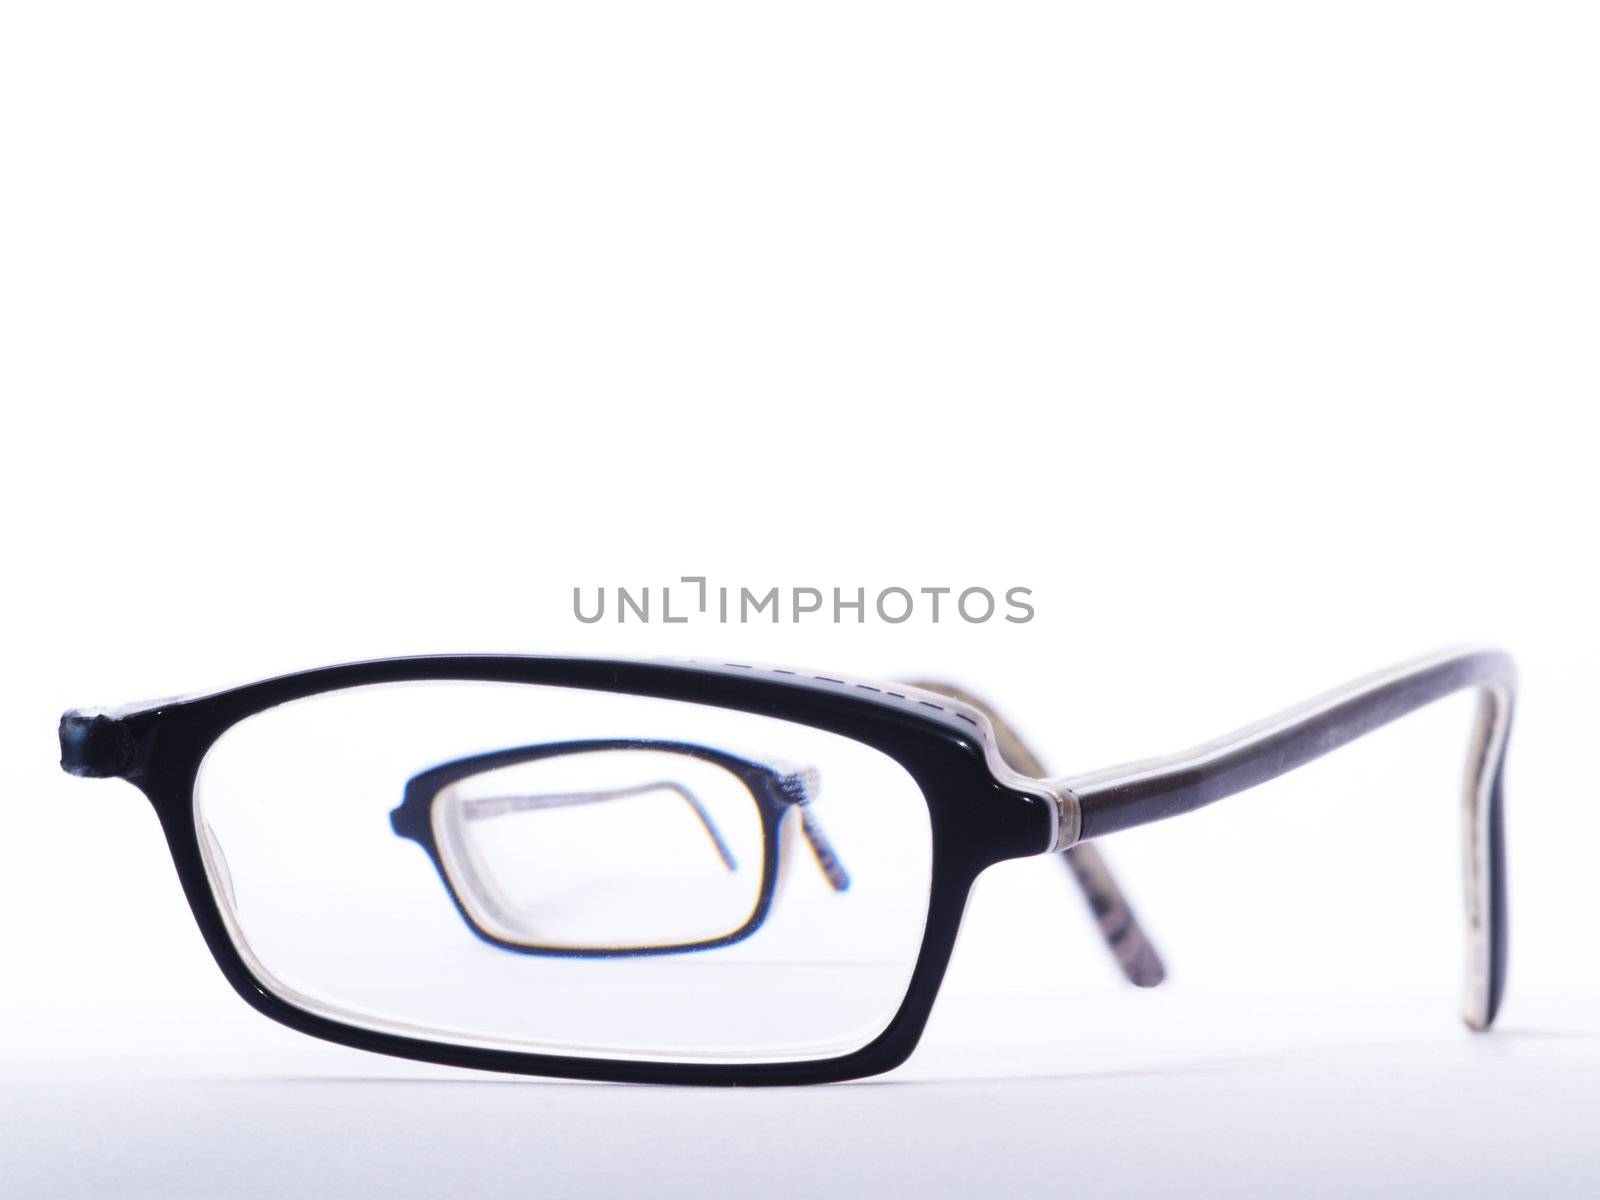 broken eyeglasses one half to be seen throug glass of the other half